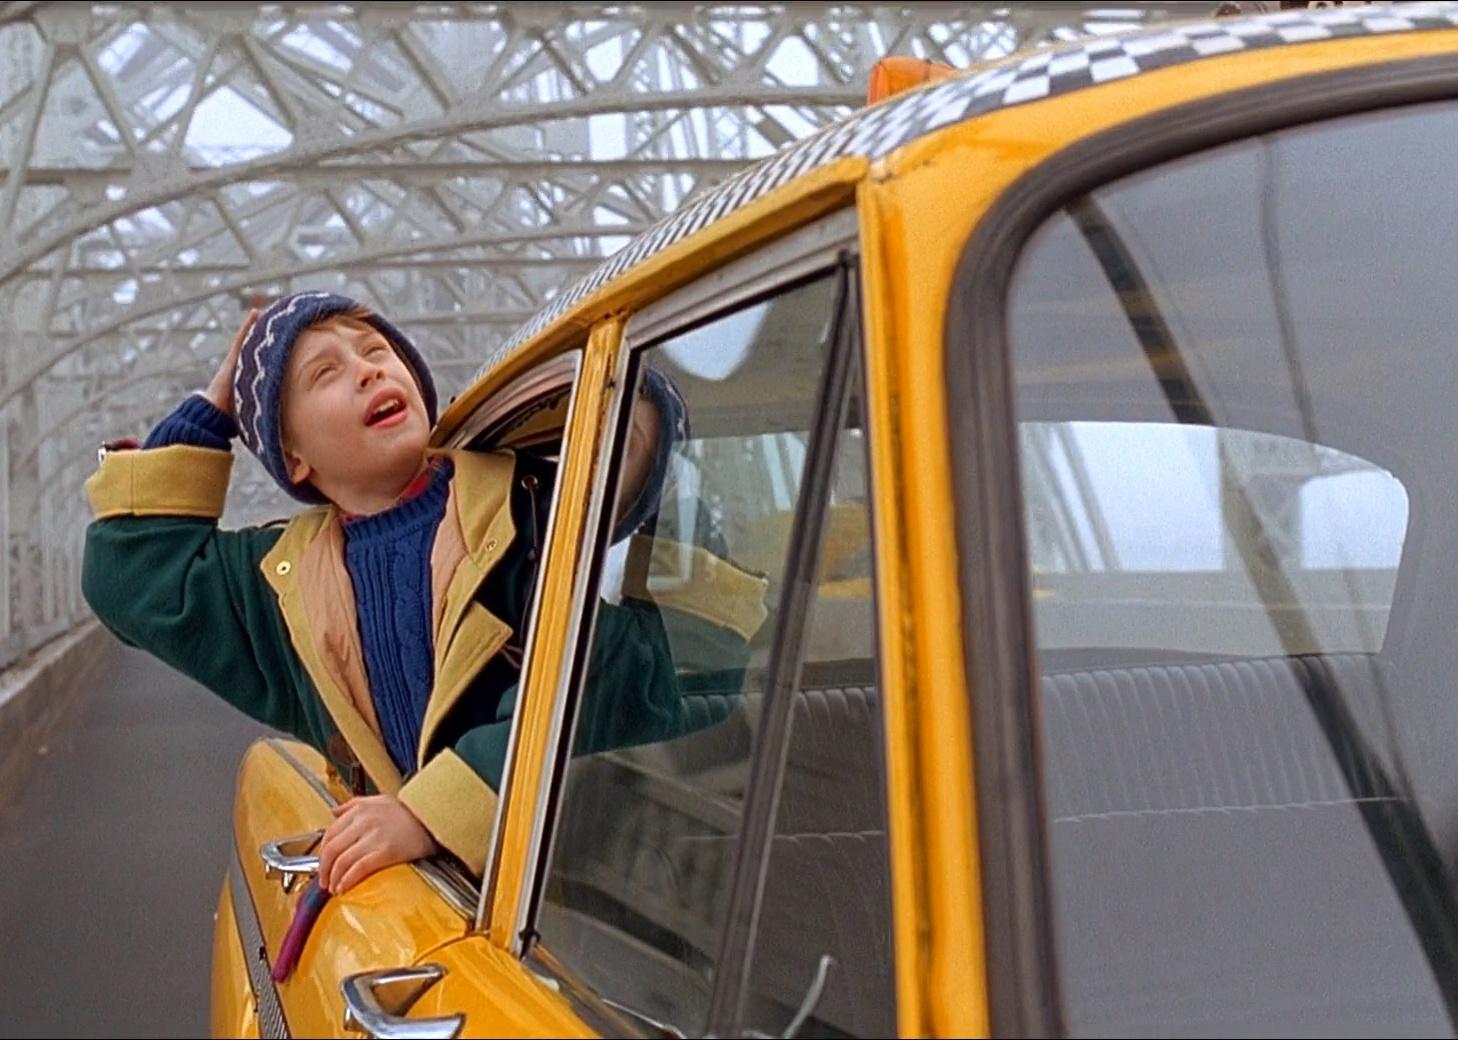 Macaulay Culkin dangles from his yellow cab as he speeds across the bridge.